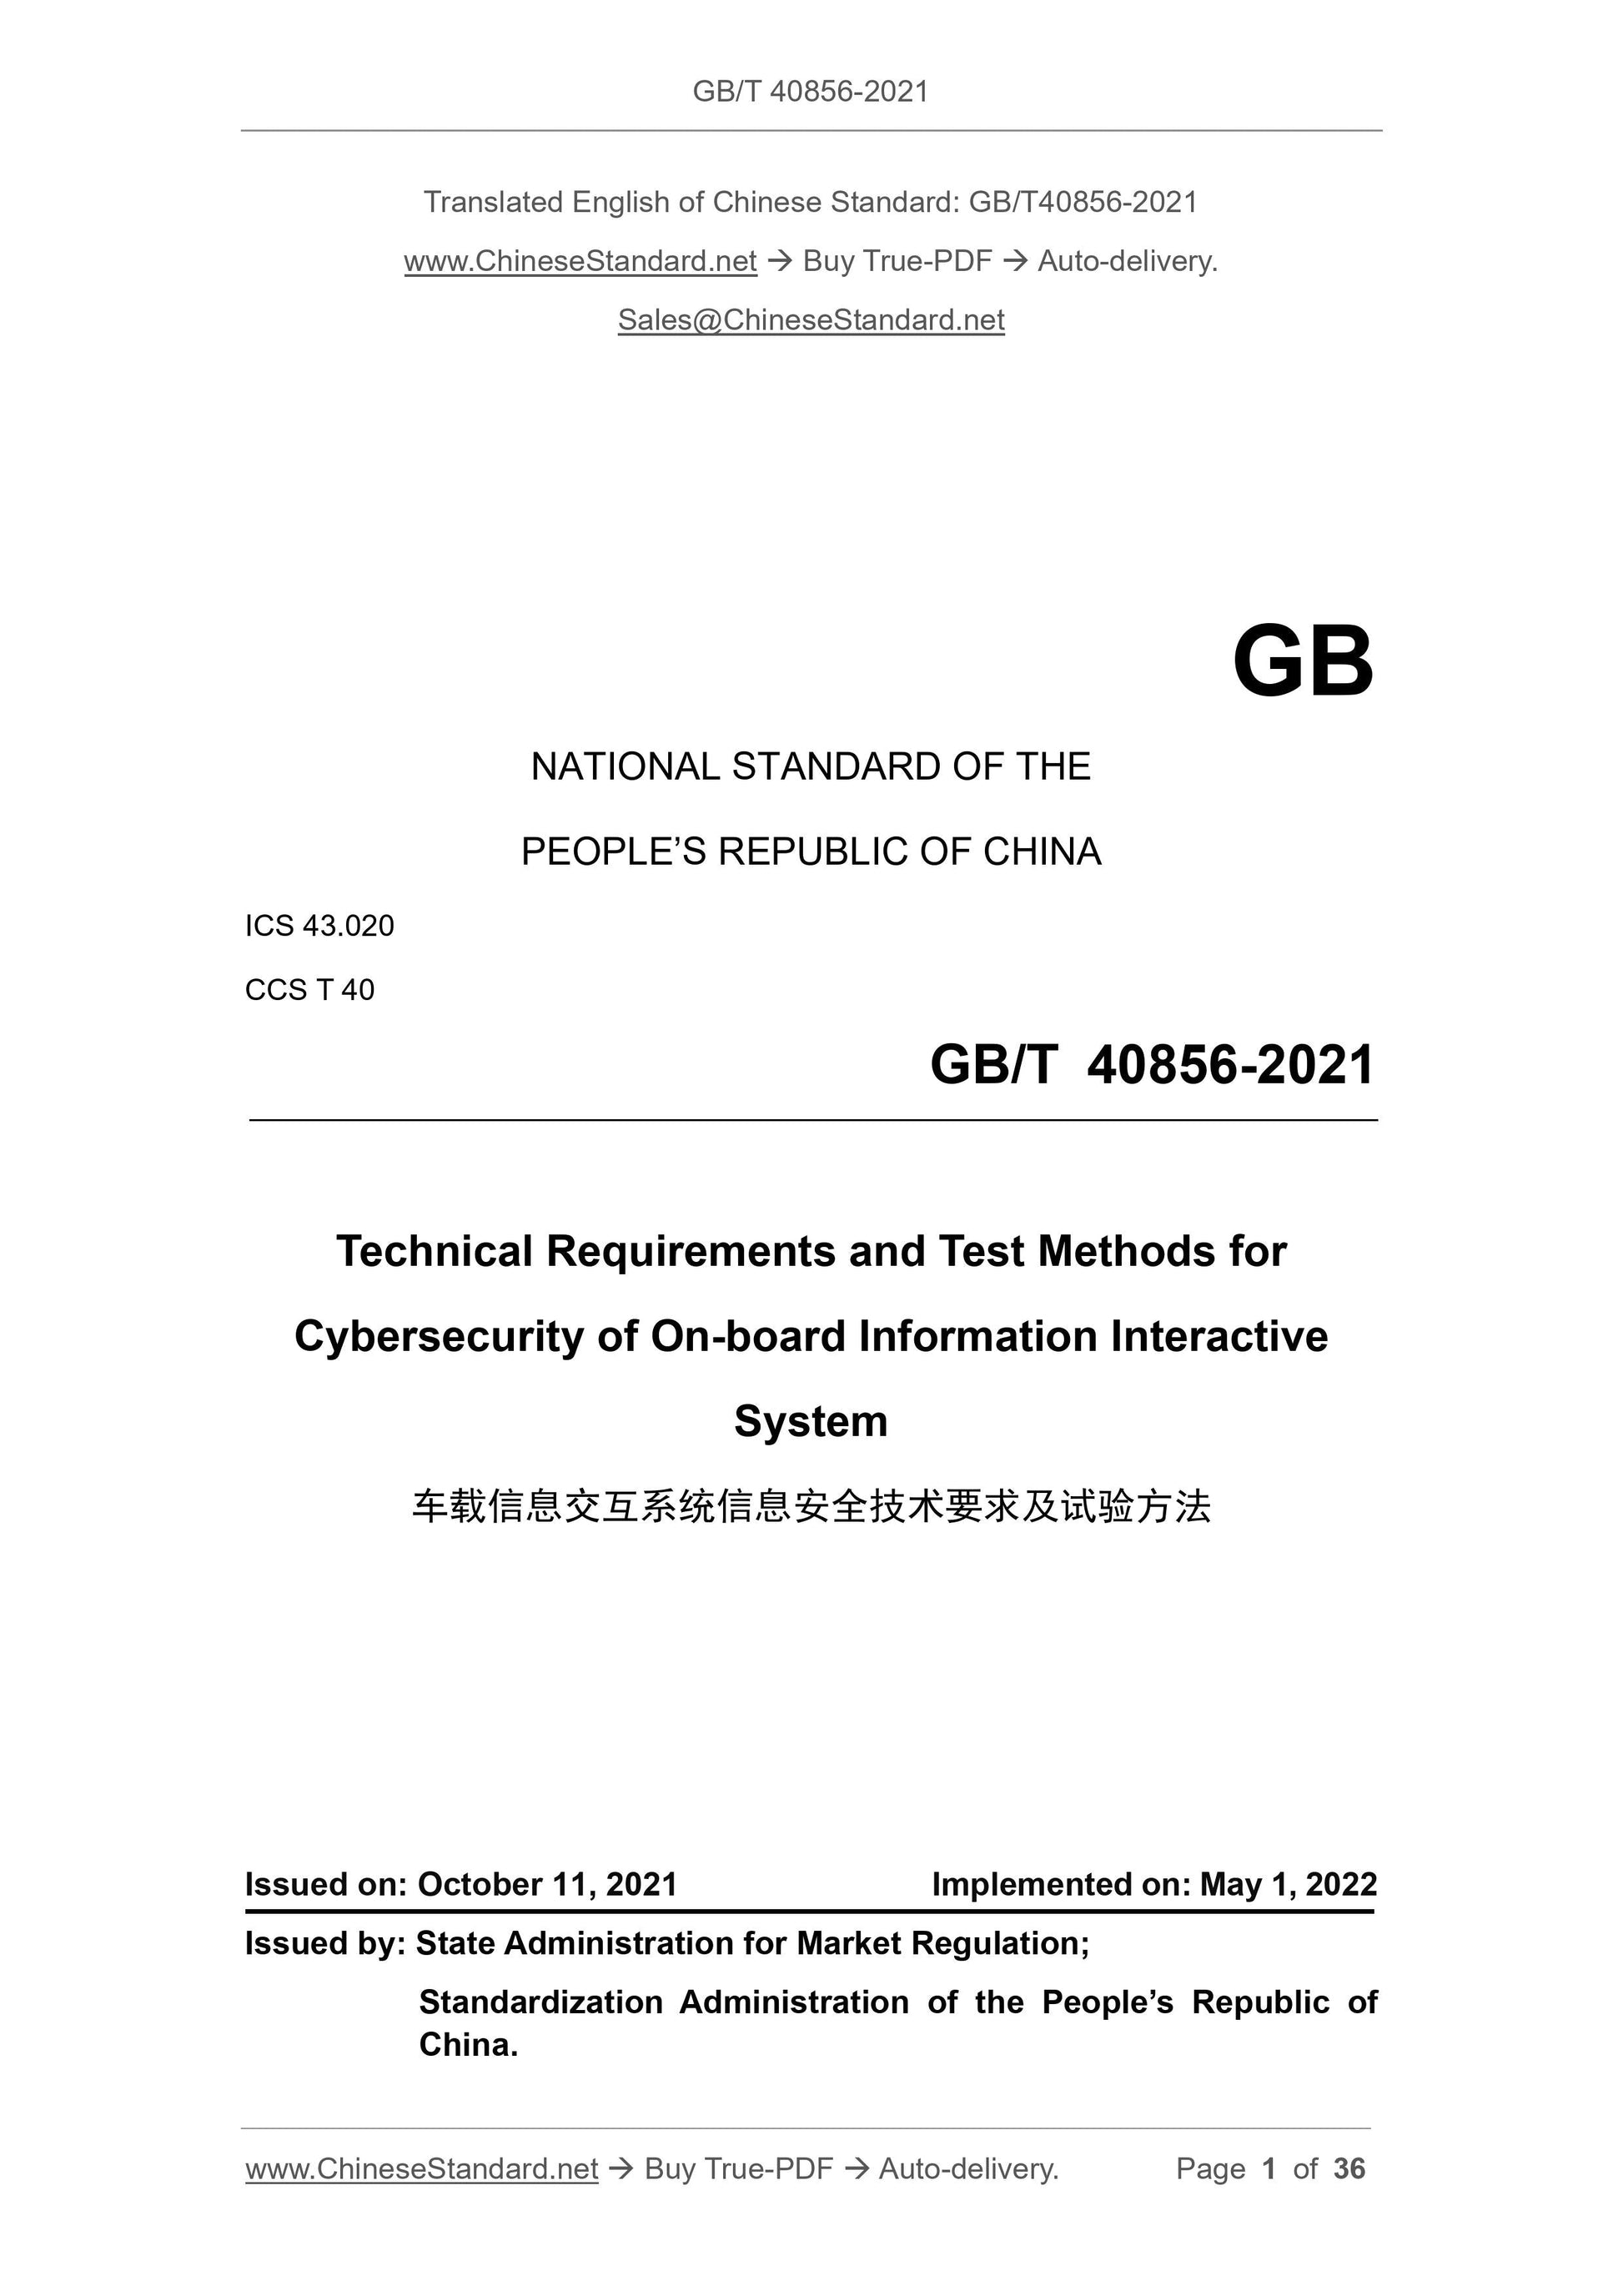 GBT40856-2021 Page 1